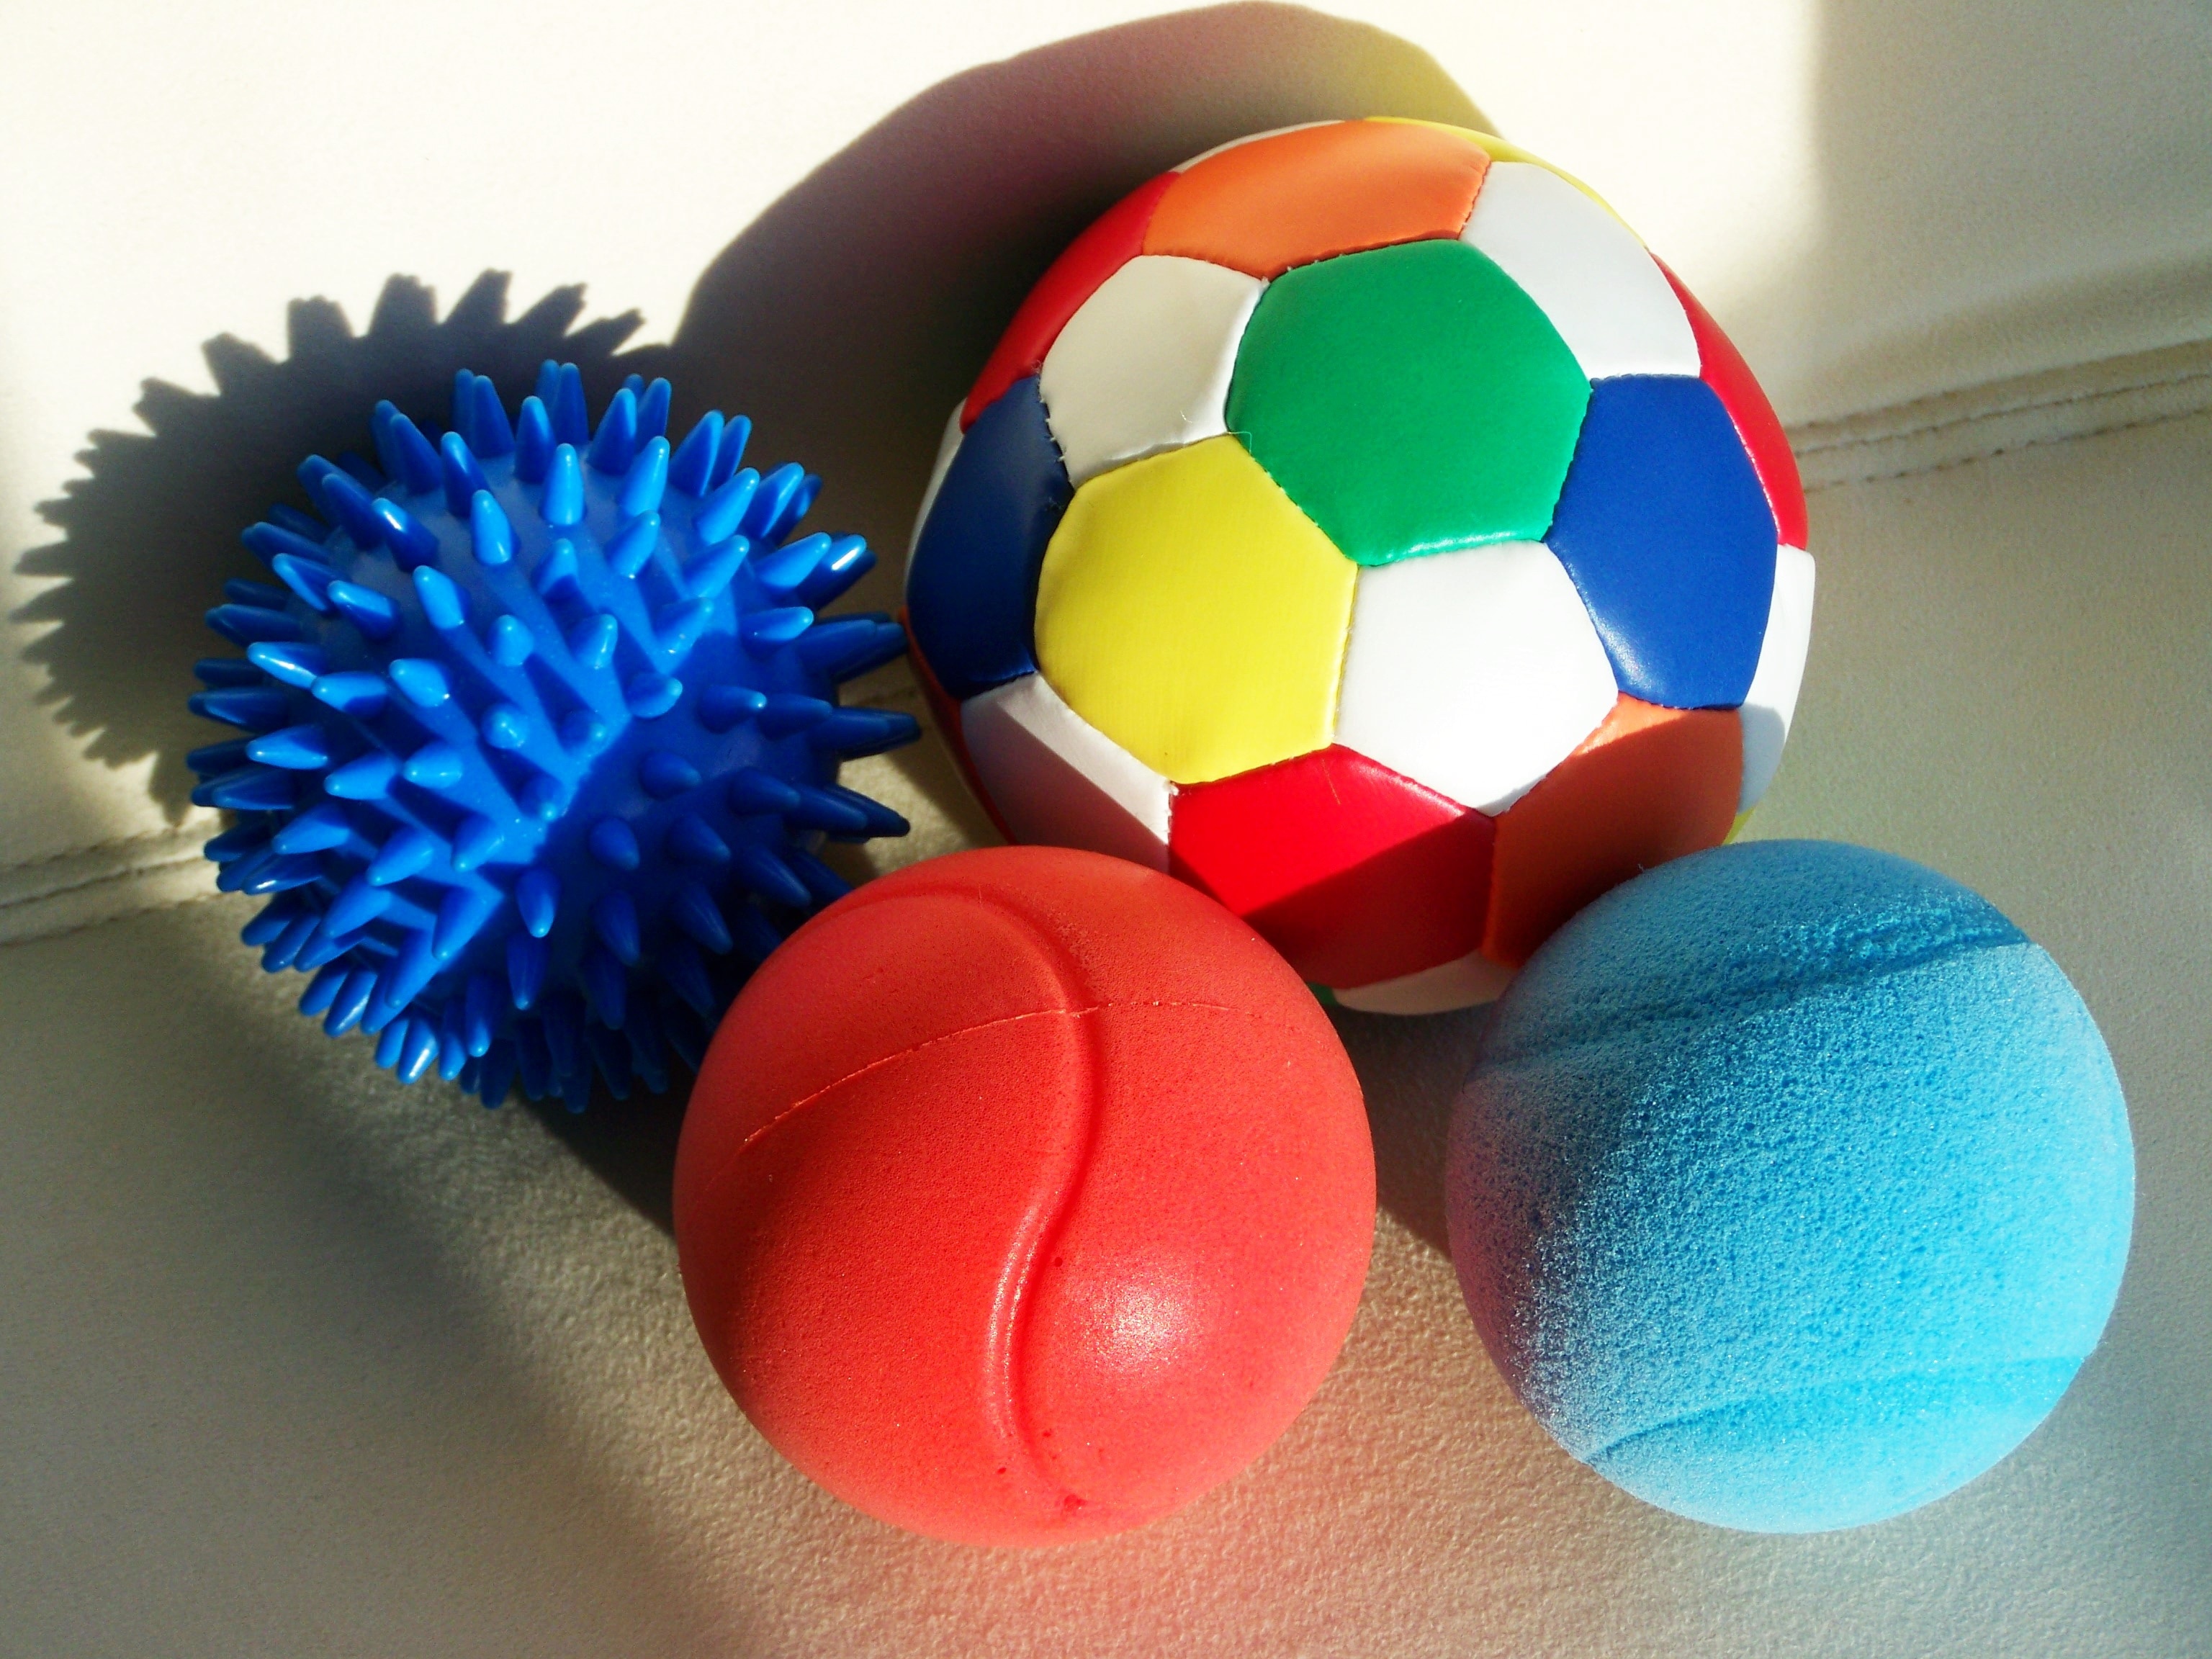 balls-colored-balls-spherical-shapes-wallpaper.jpg